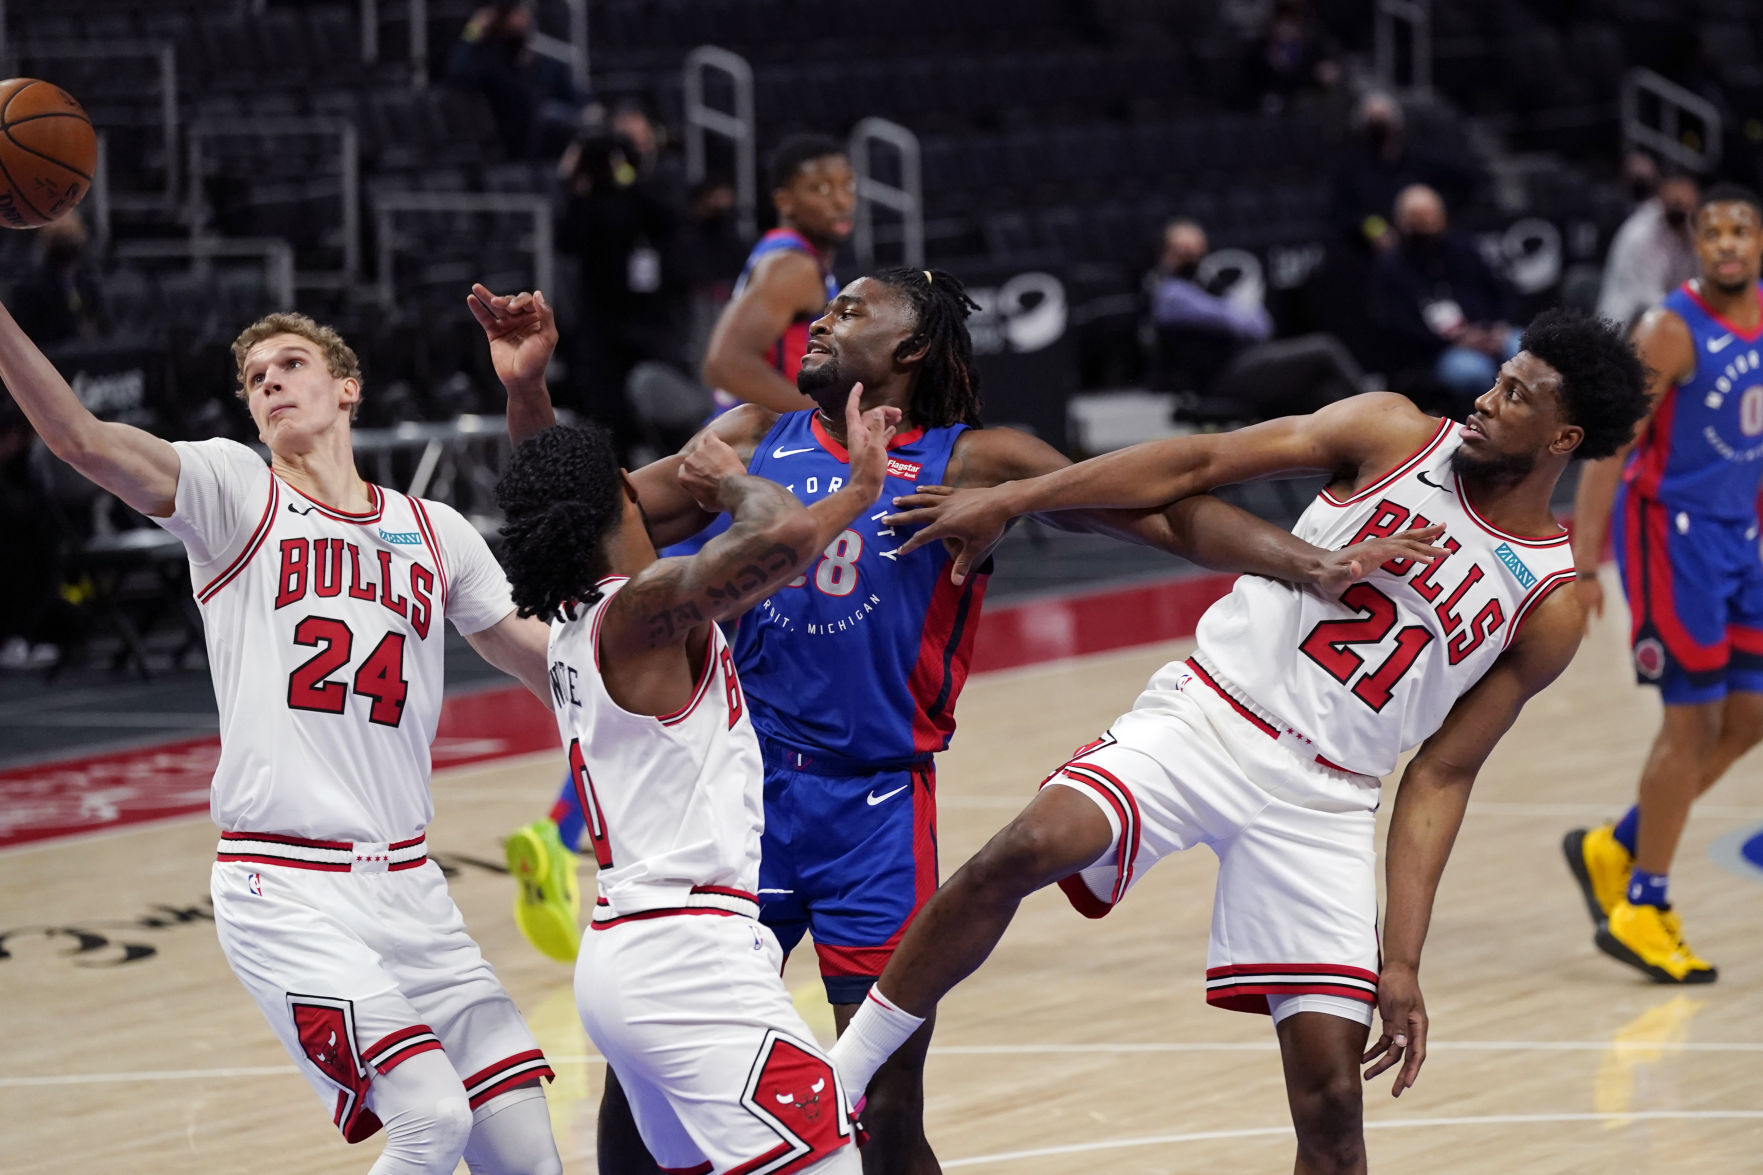 Bulls defense solid in win over Pistons